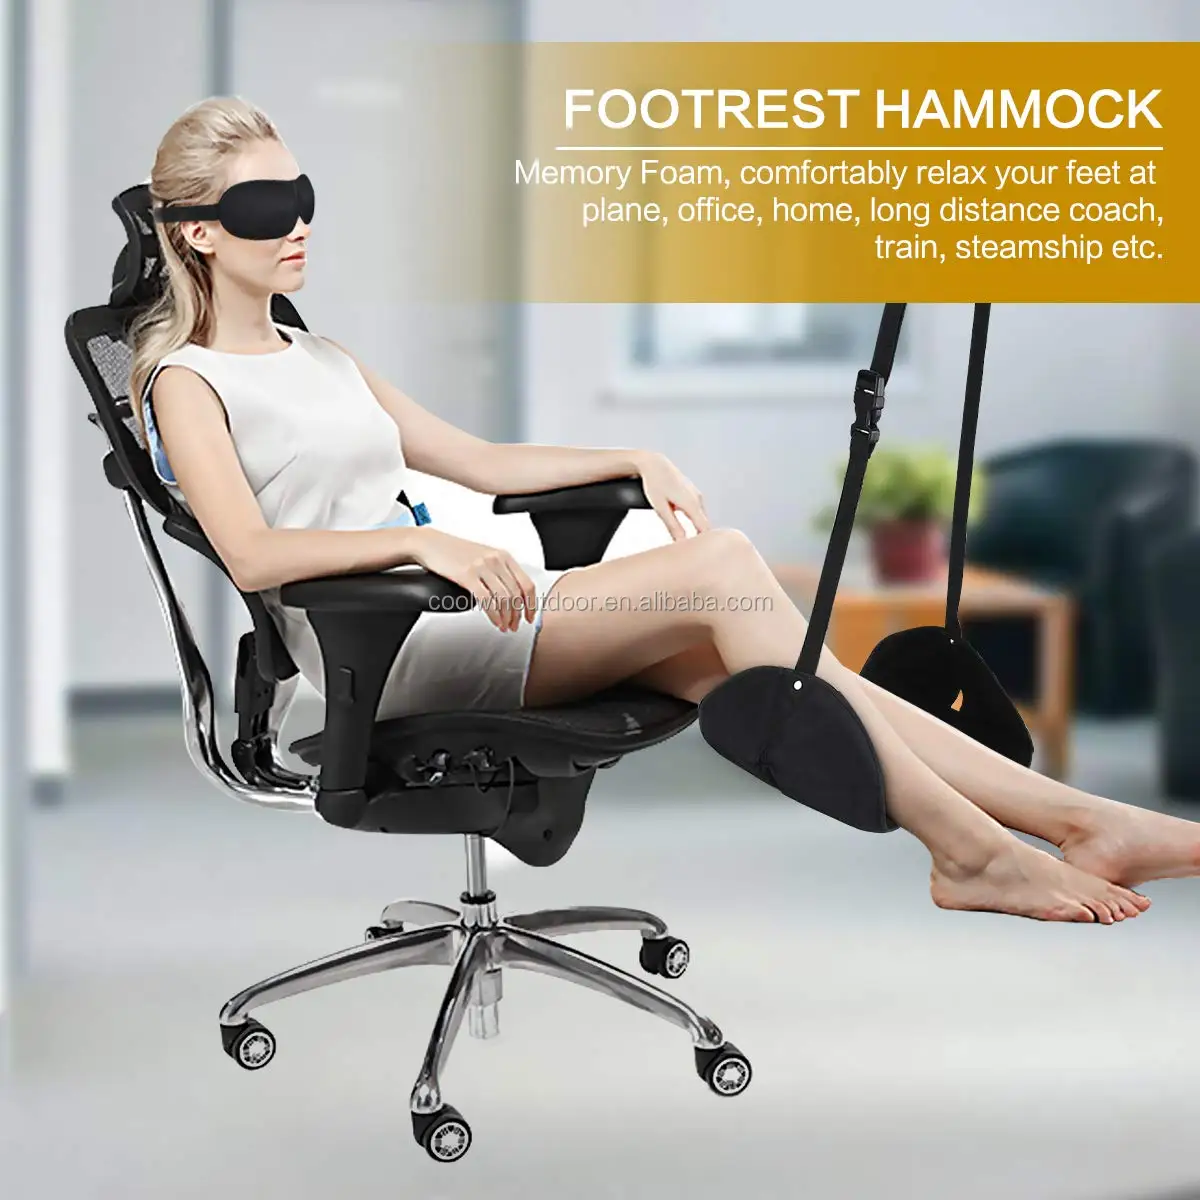 Hammock Feet Desk, Footrest Office Outdoor